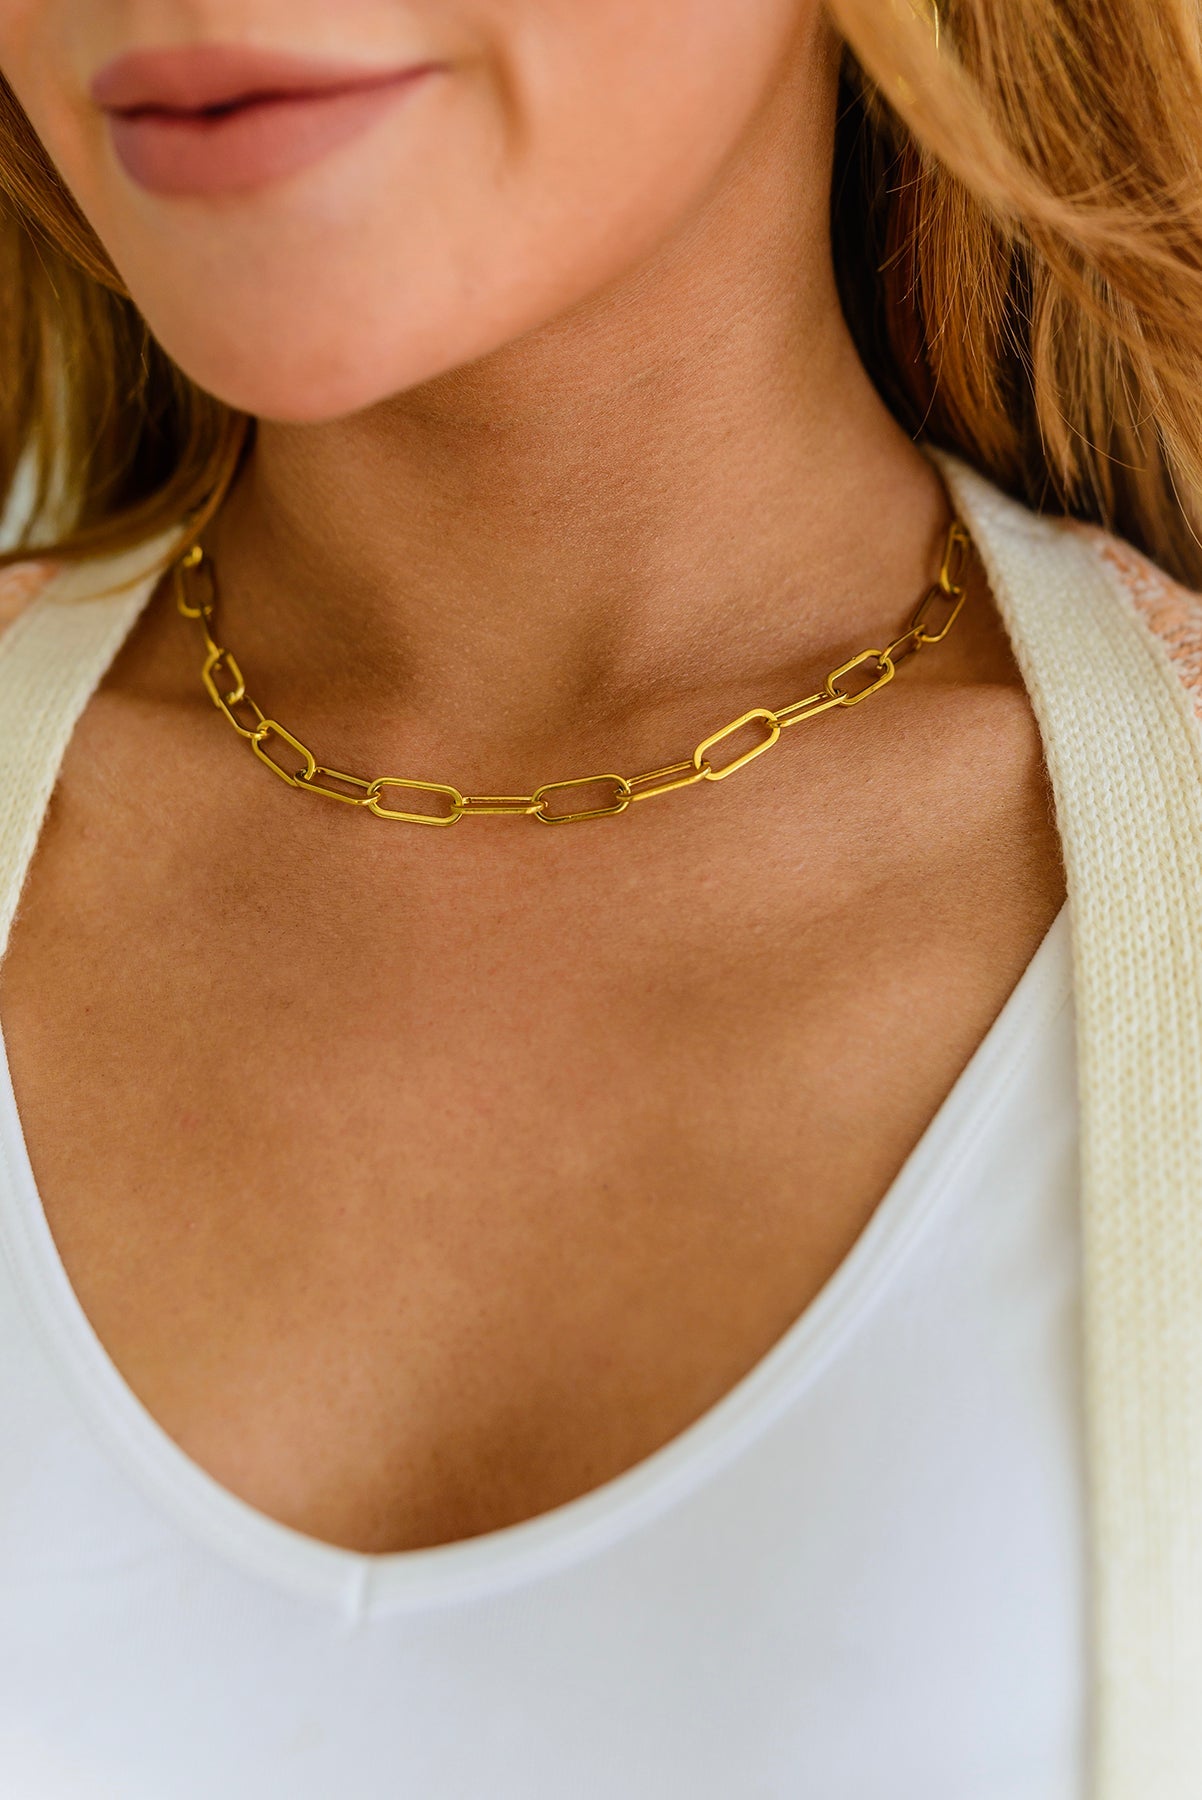 RESTOCKED | Classic Paper Clip Chain Necklace